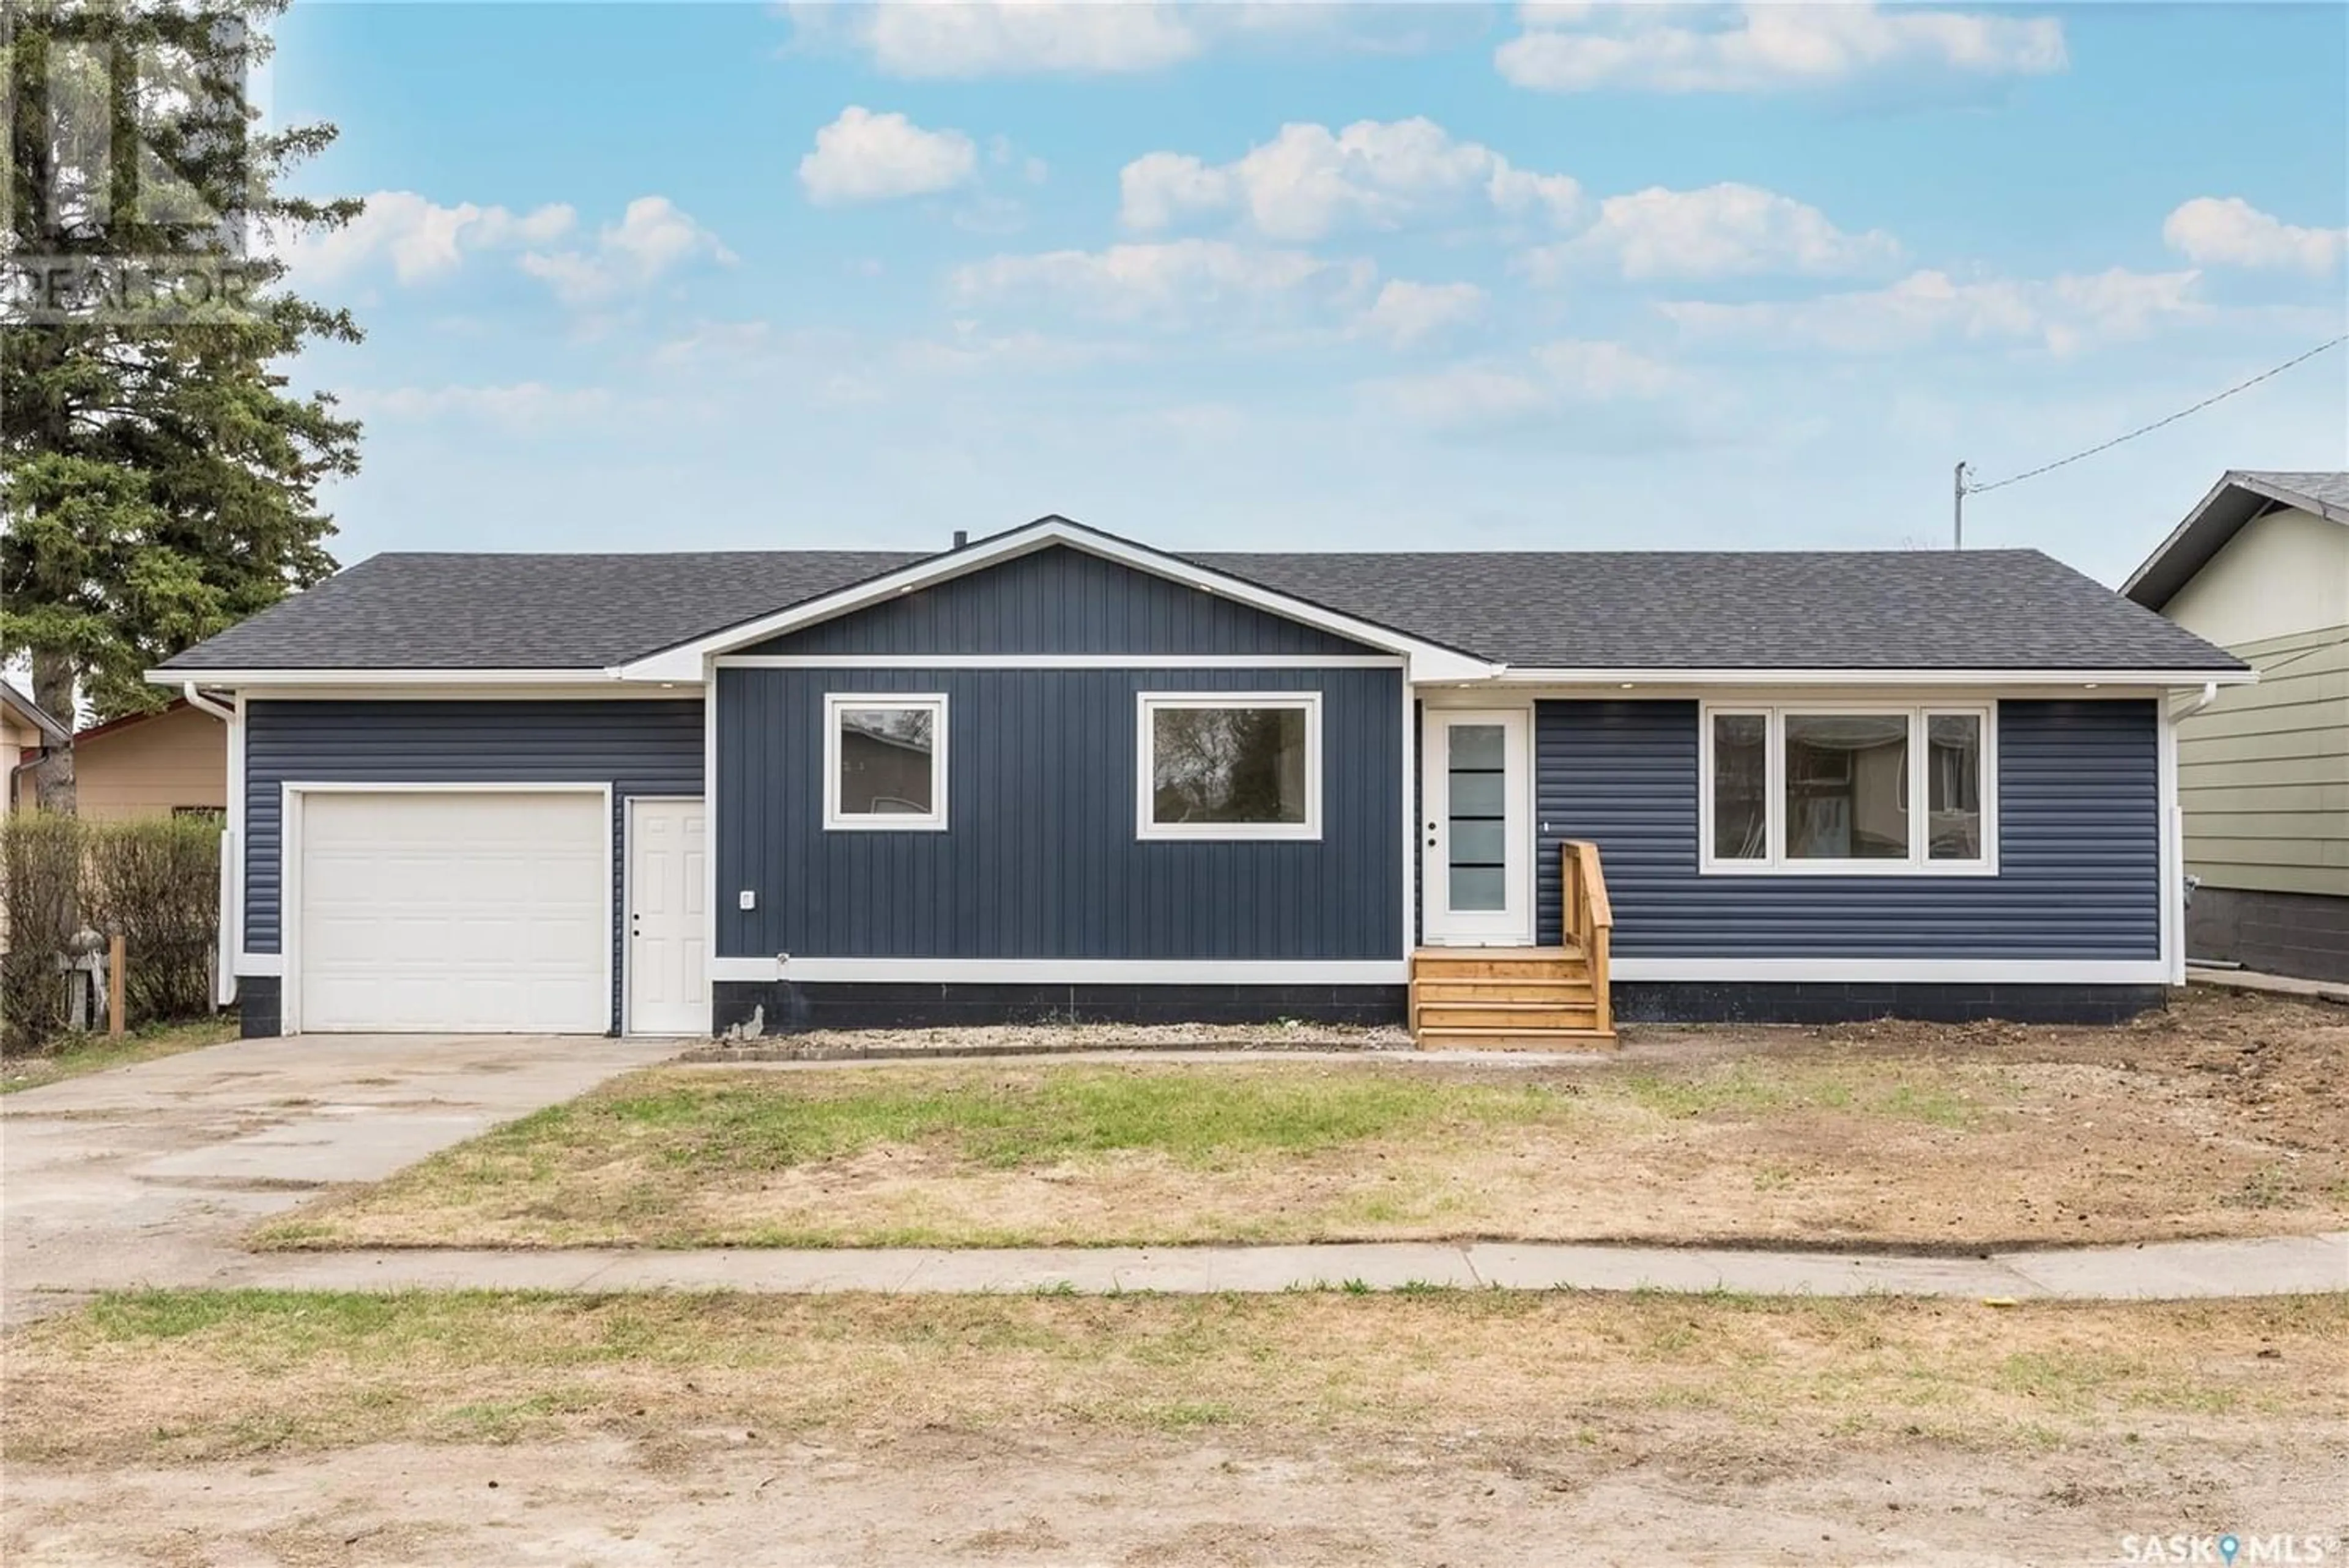 Home with vinyl exterior material for 204 Main STREET, Waldheim Saskatchewan S0K4R0